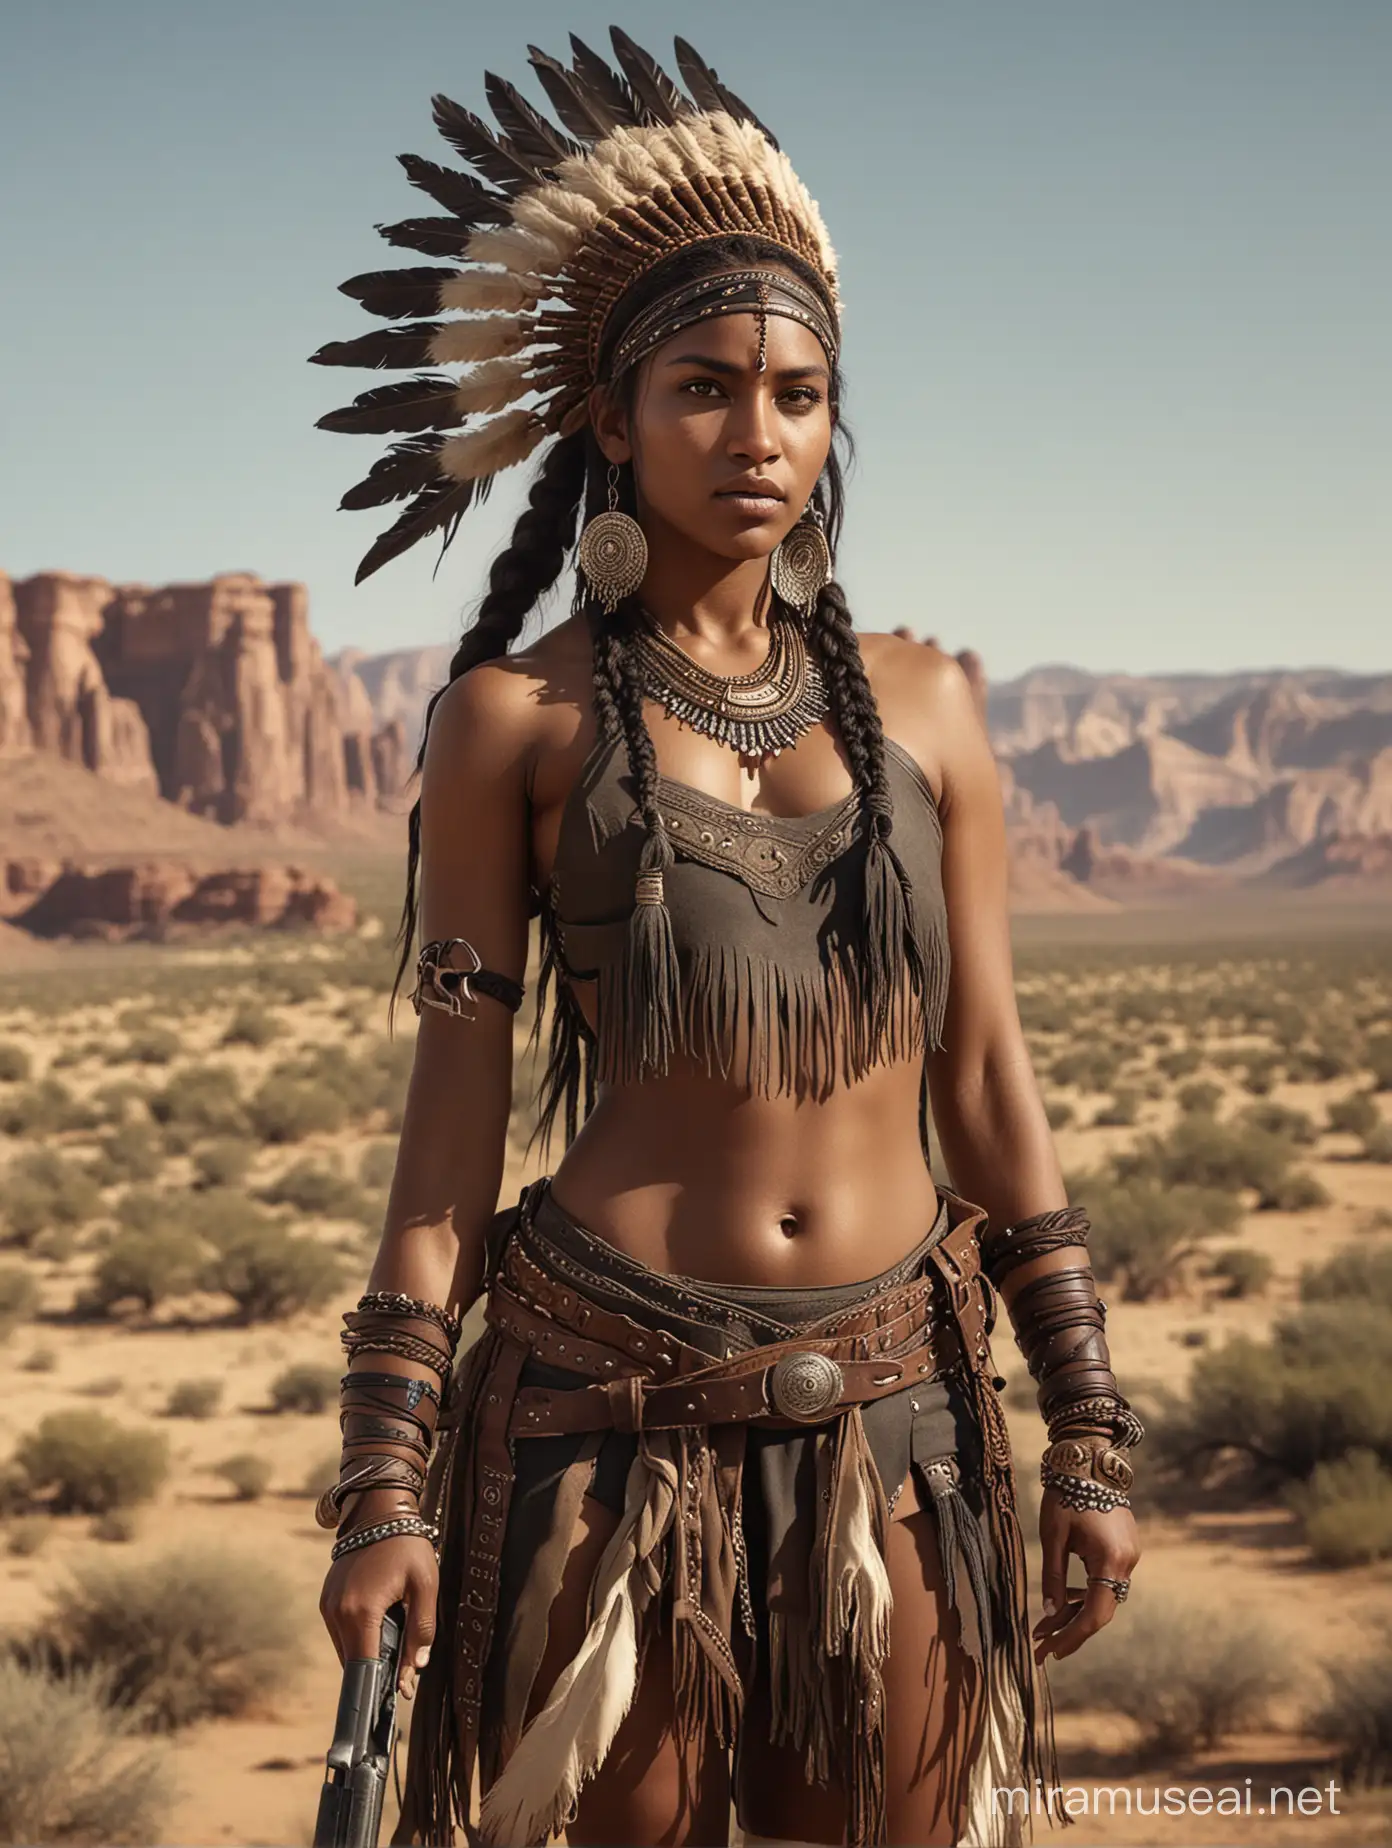 Stunning Black Indian Woman Warrior in 1800s Apache Headdress